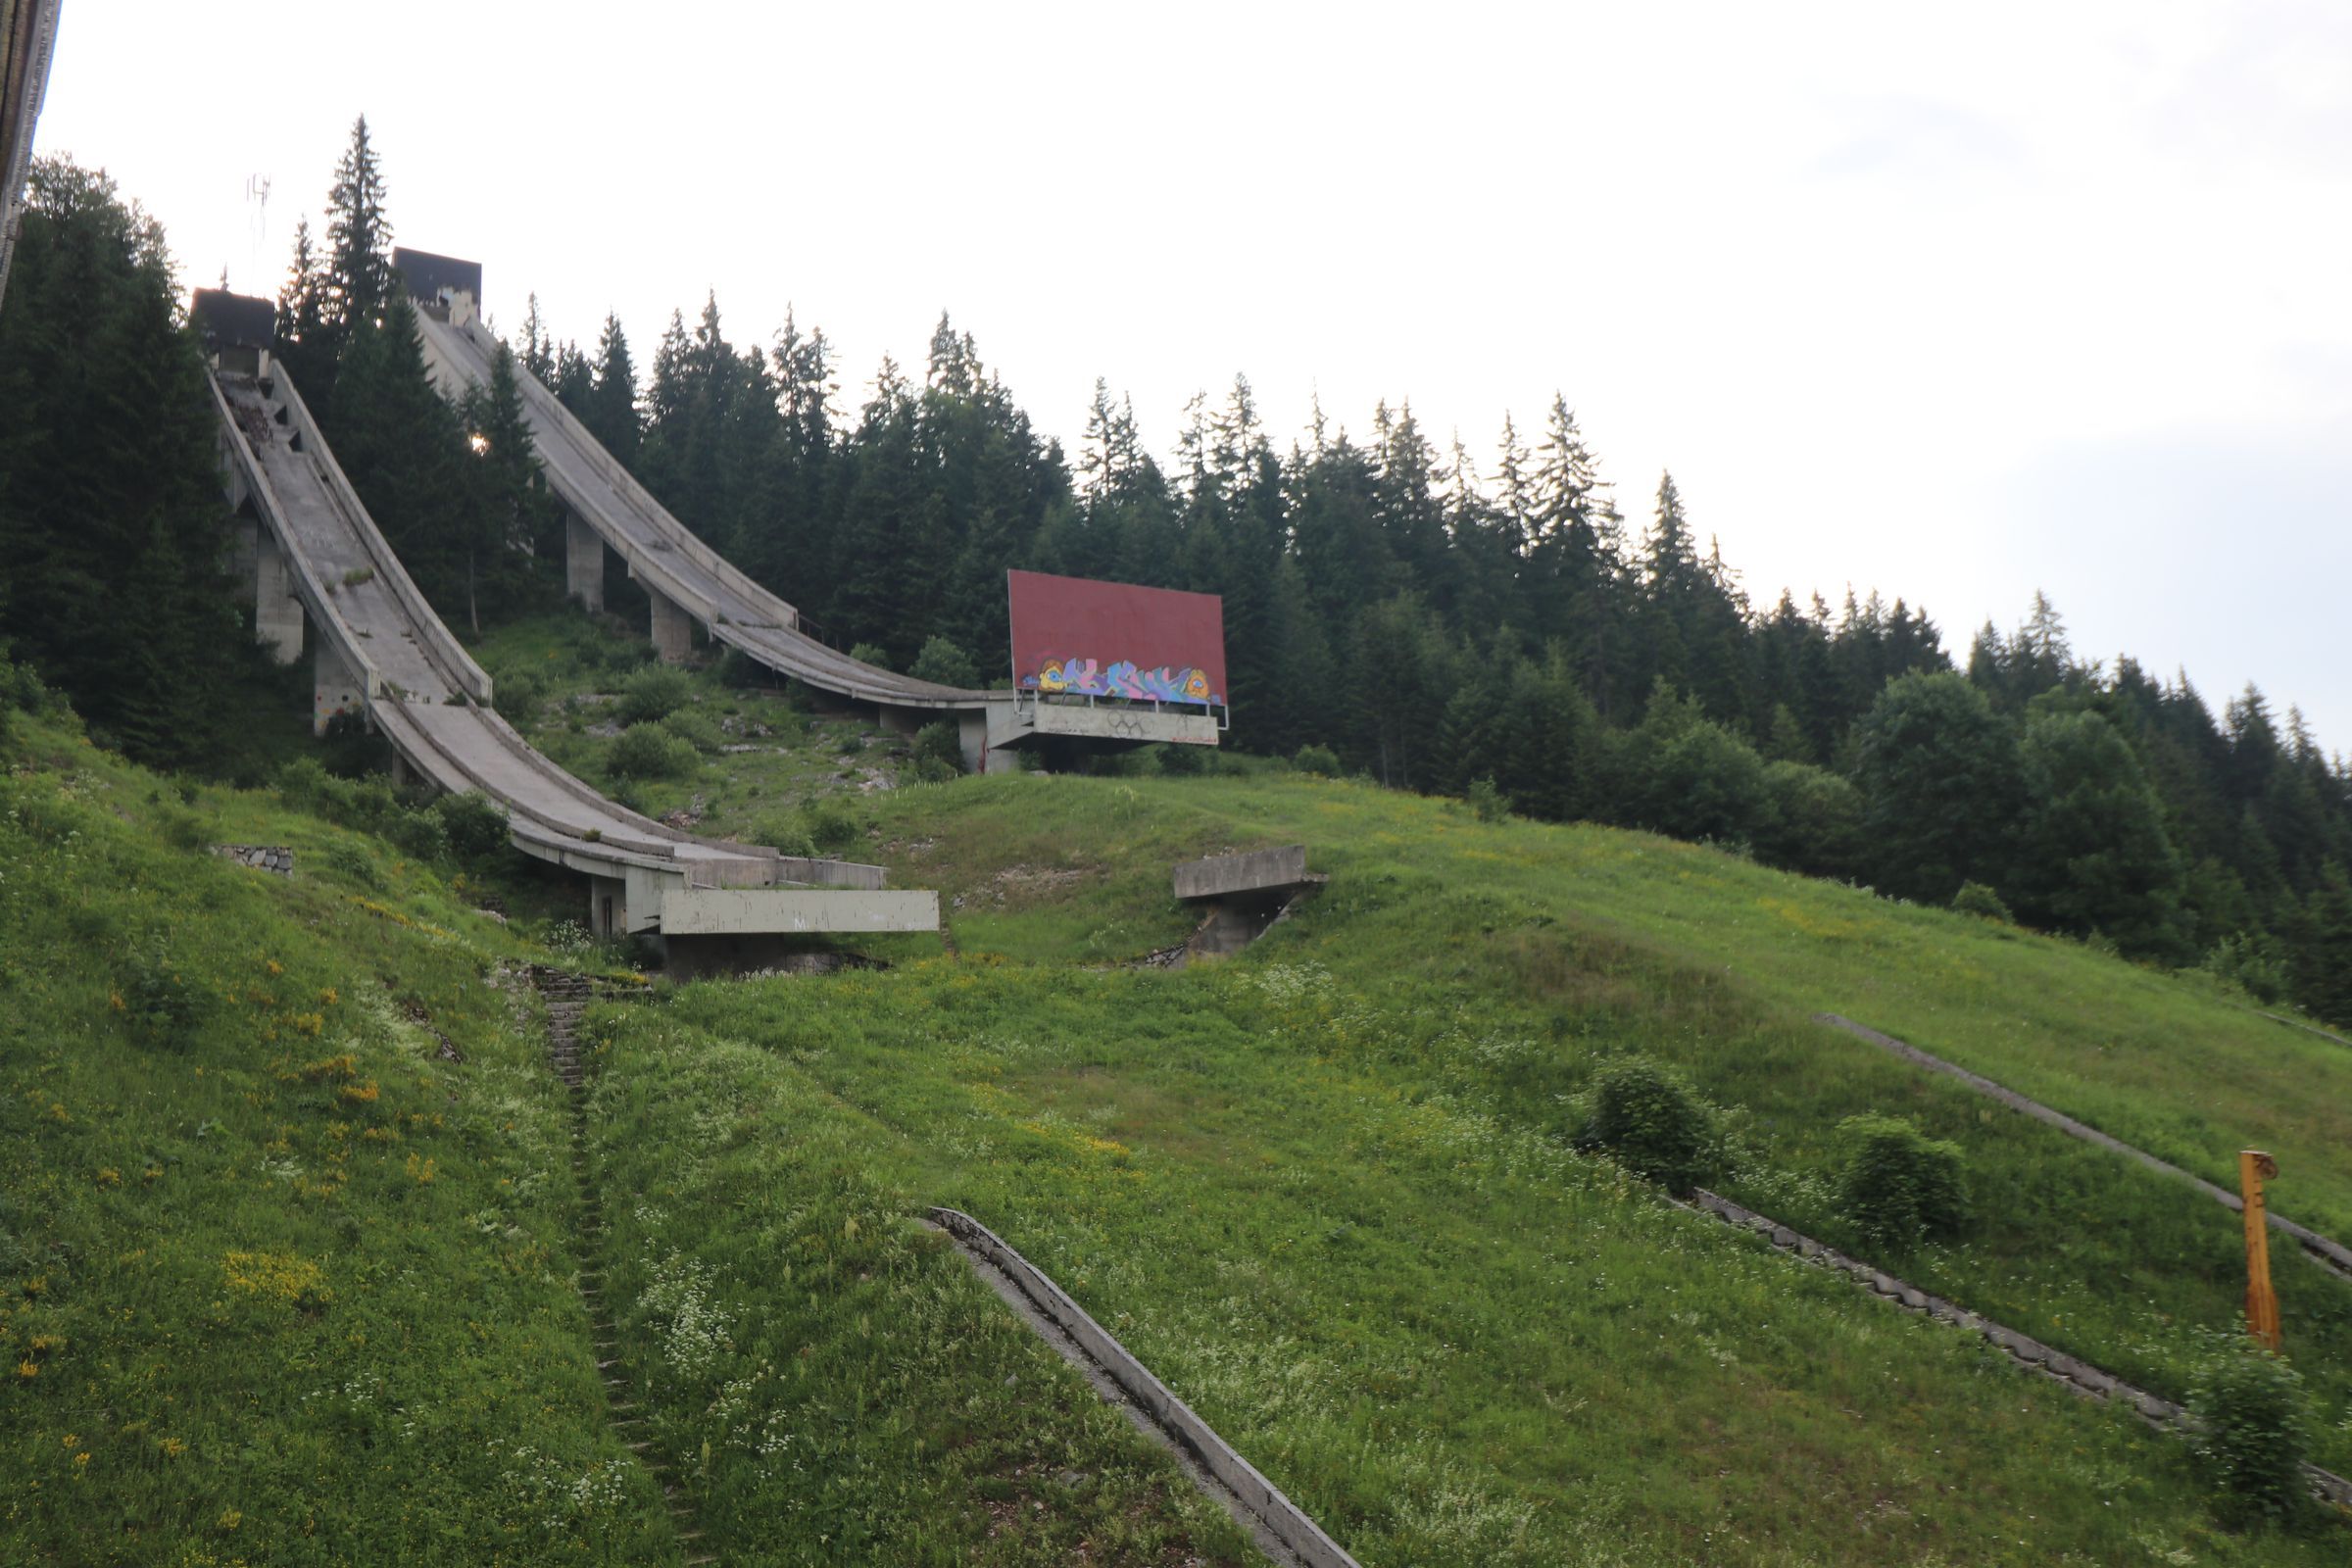 Olimpic ski jump / Skakaonica Igman